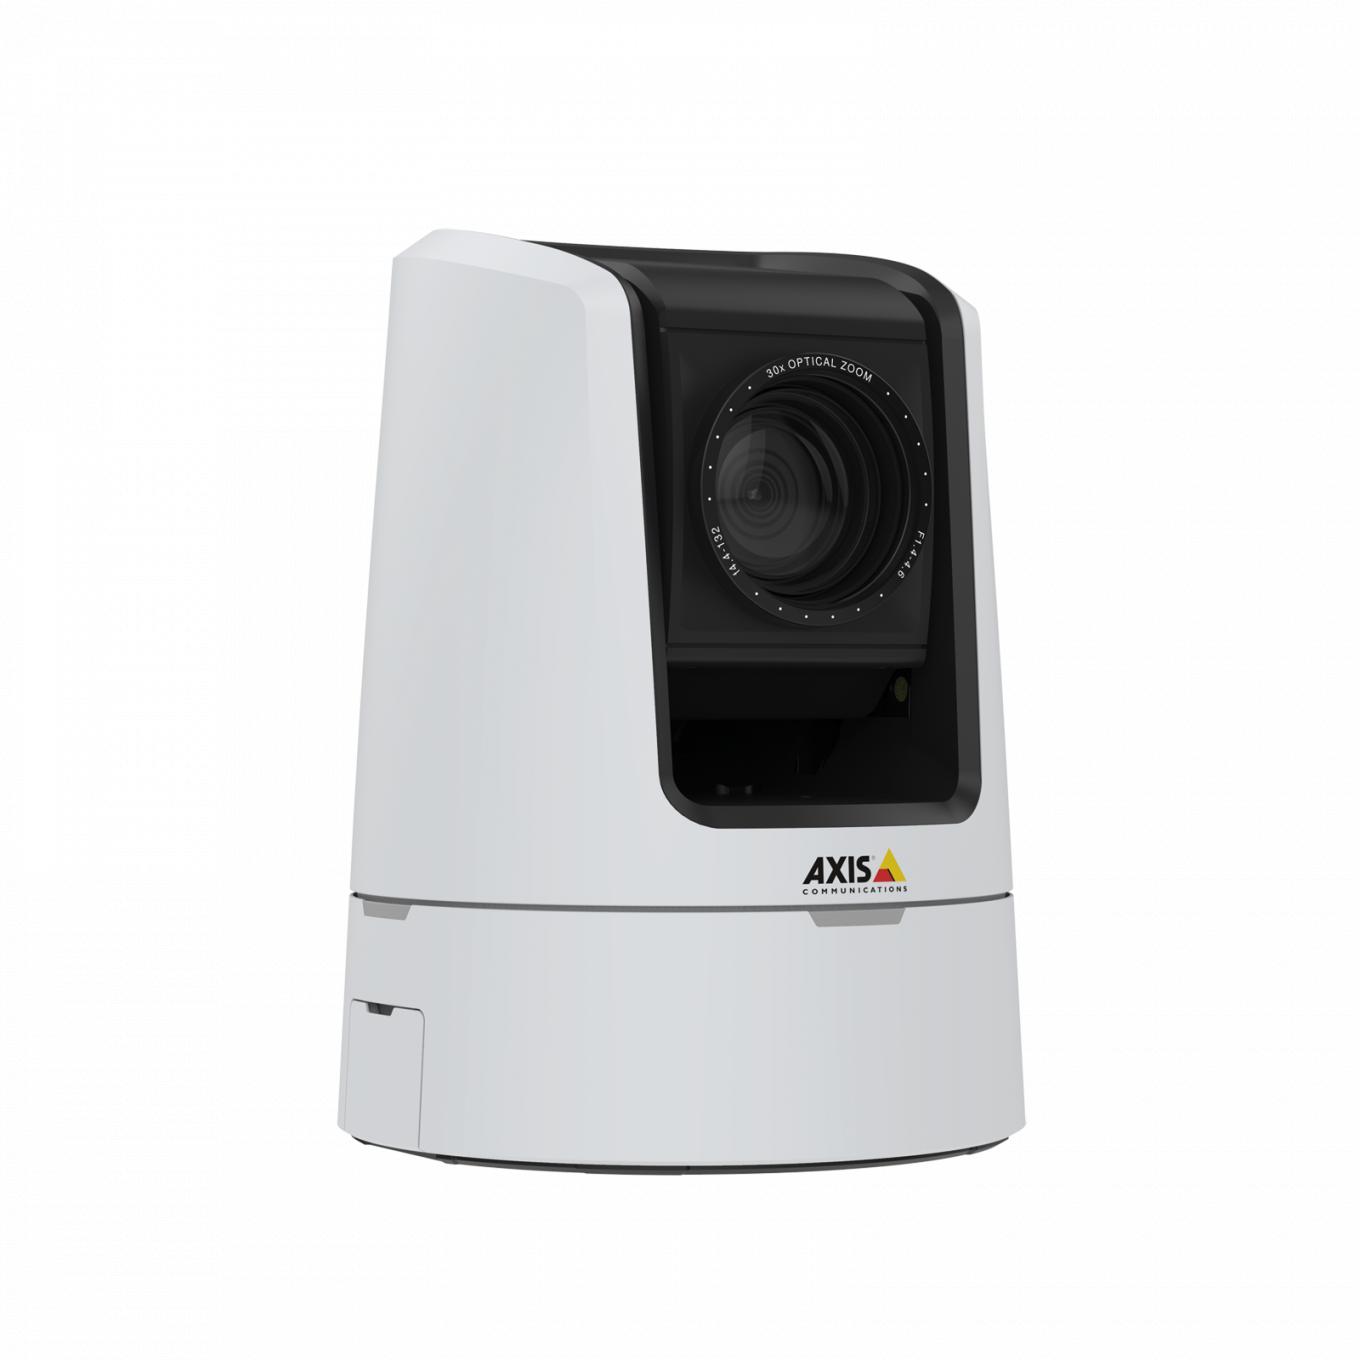 AXIS V5925 PTZ Network Camera는 방송용 품질의 HDTV 1080p를 제공합니다.